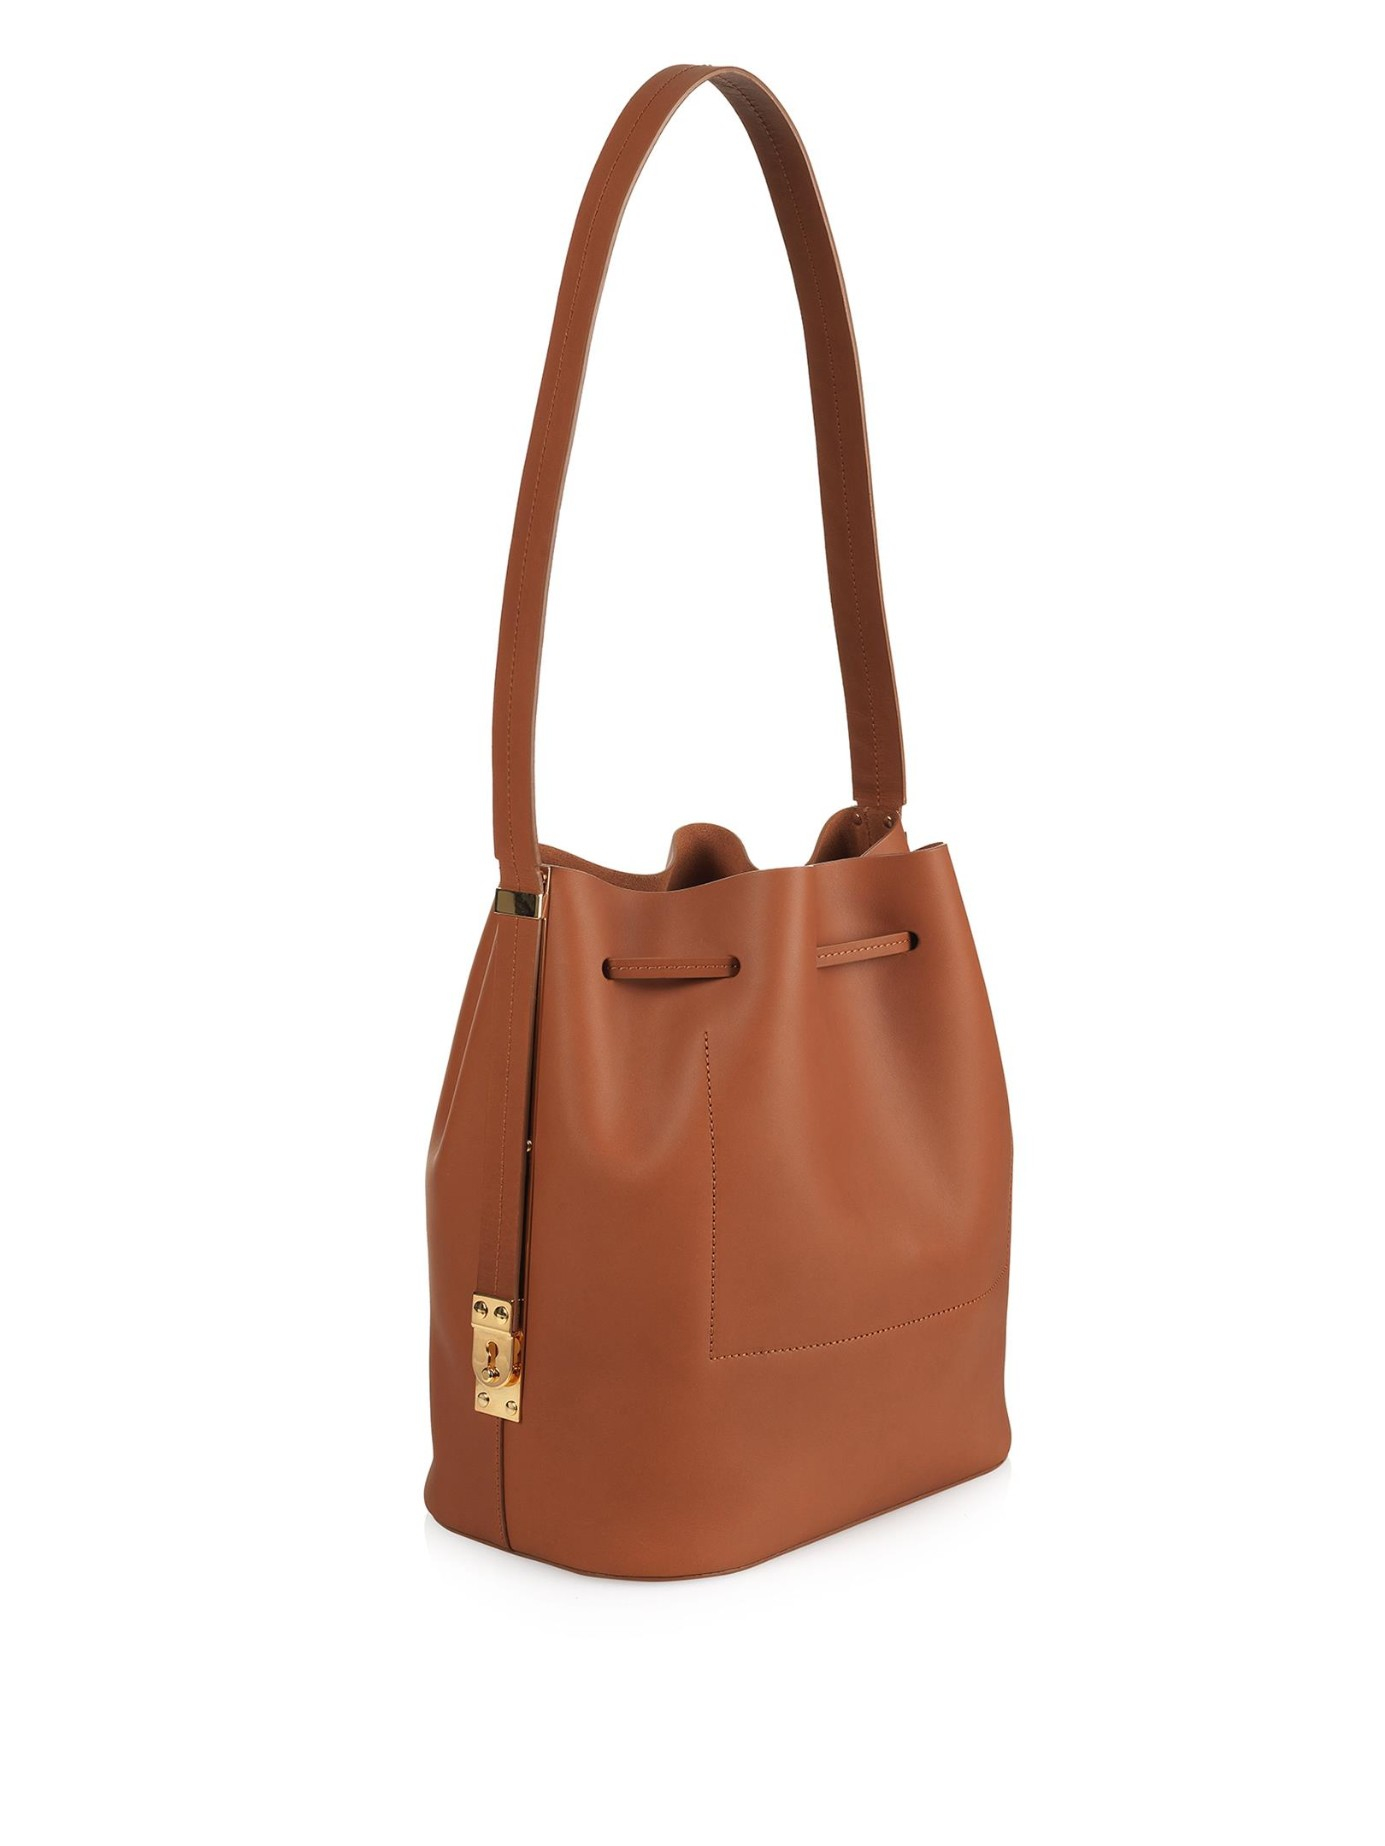 Lyst - Sophie hulme Gibson Leather Bucket Bag in Brown